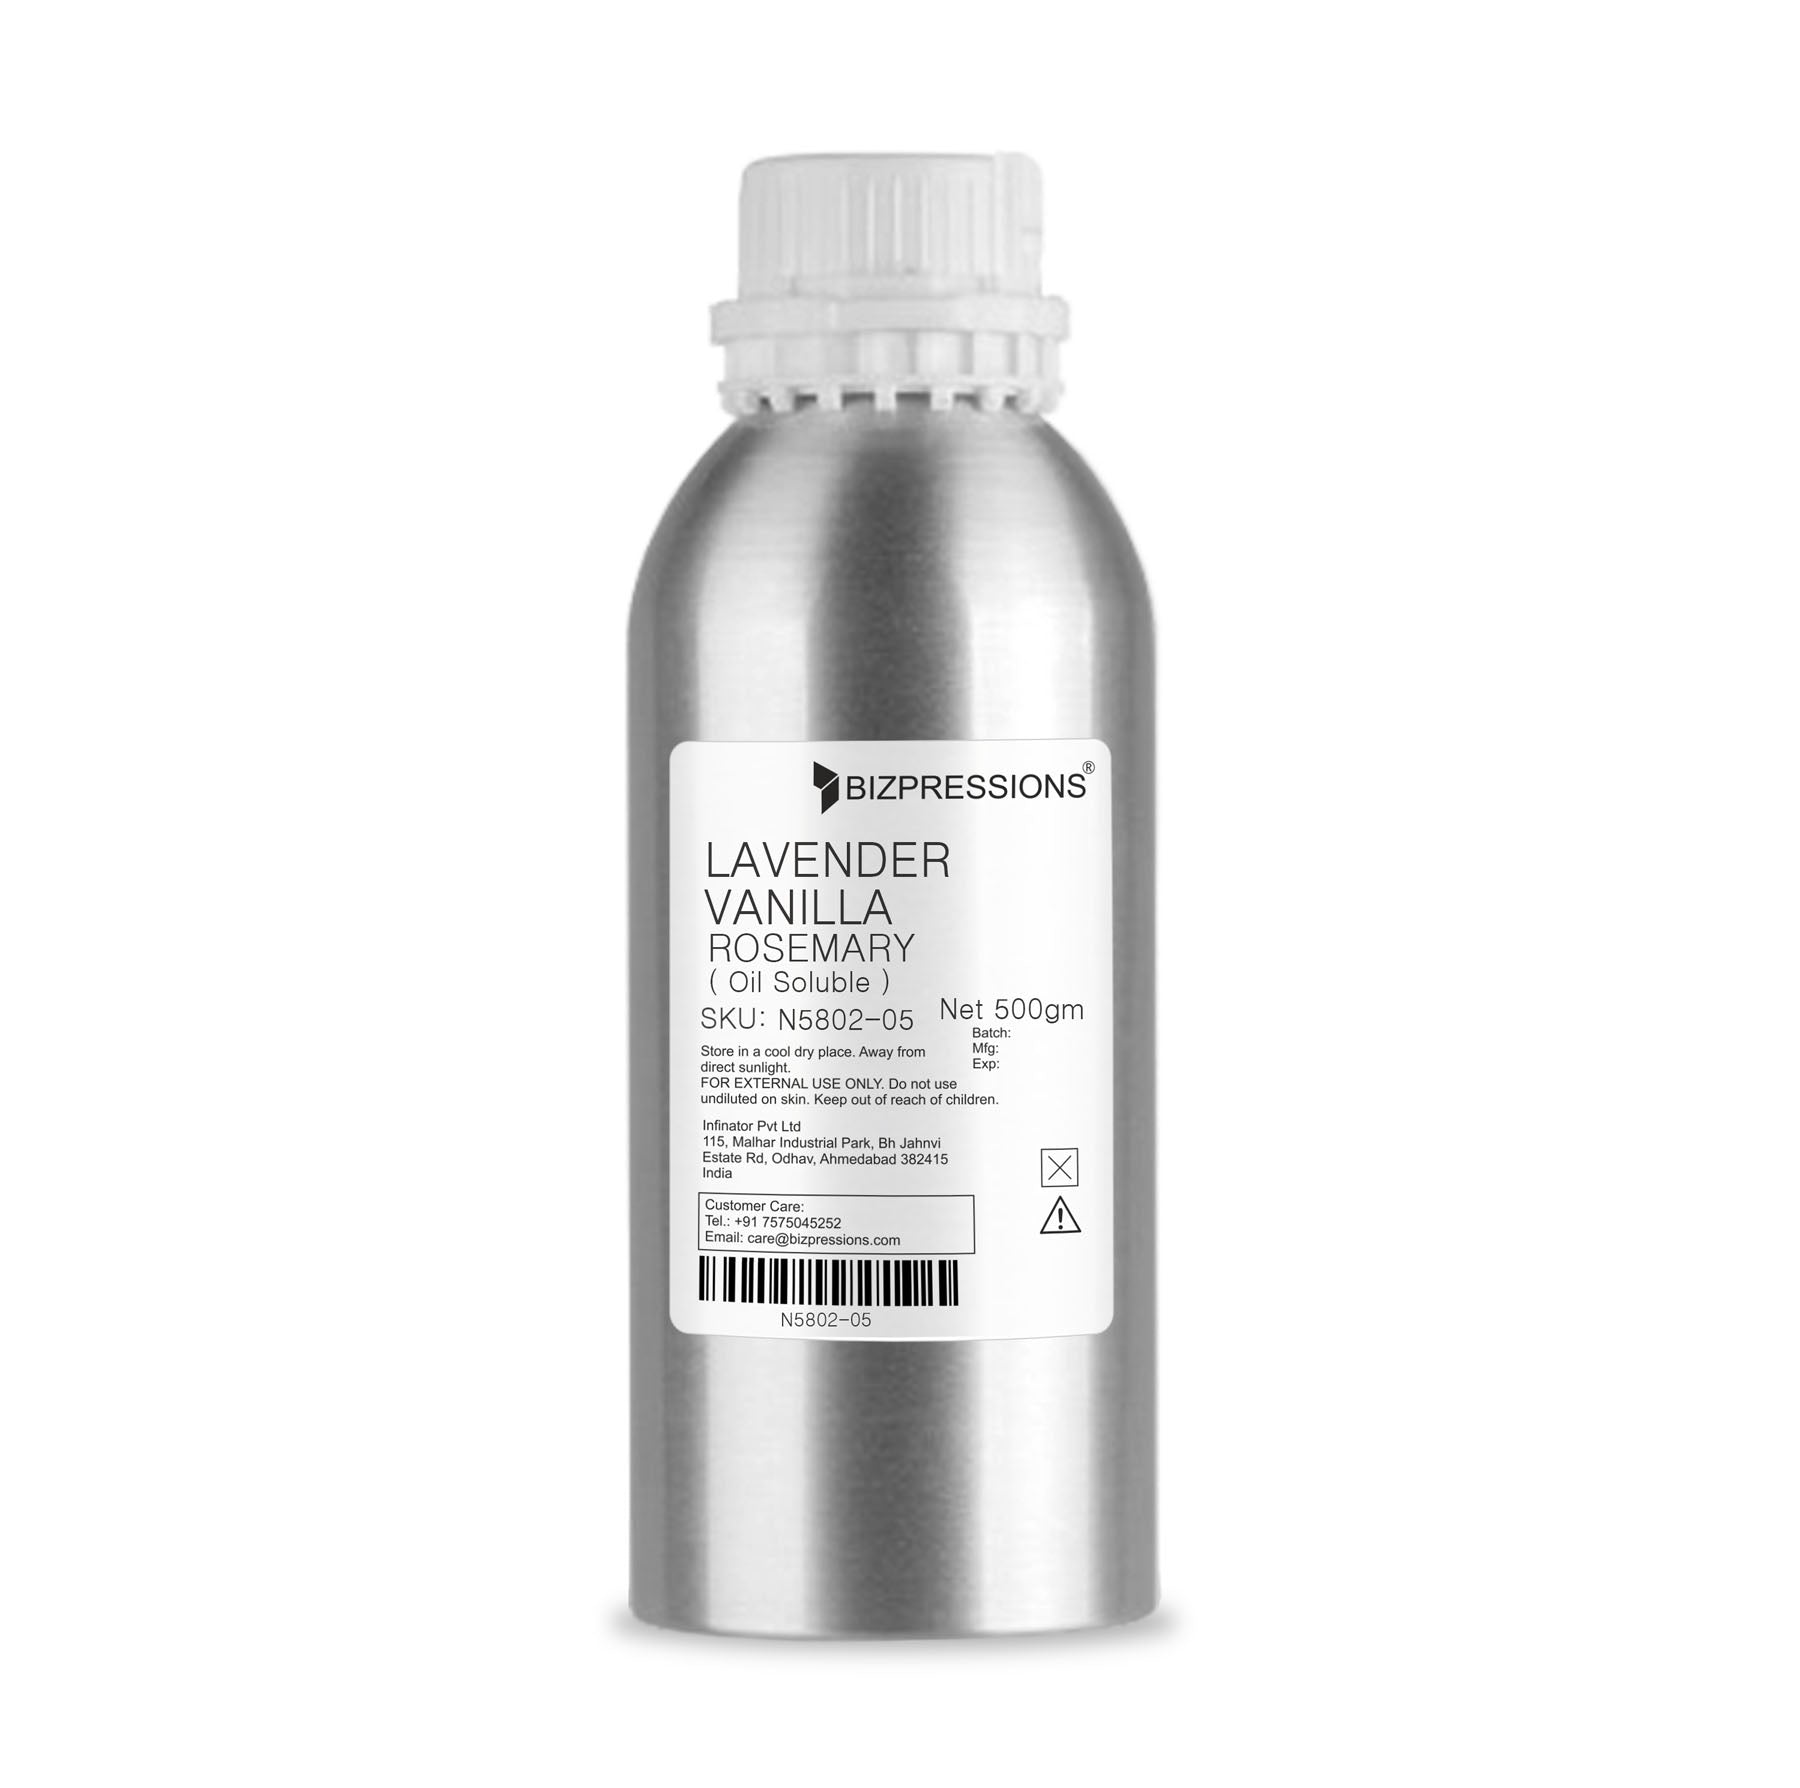 LAVENDER VANILLA ROSEMARY - Fragrance ( Oil Soluble ) - 500 gm